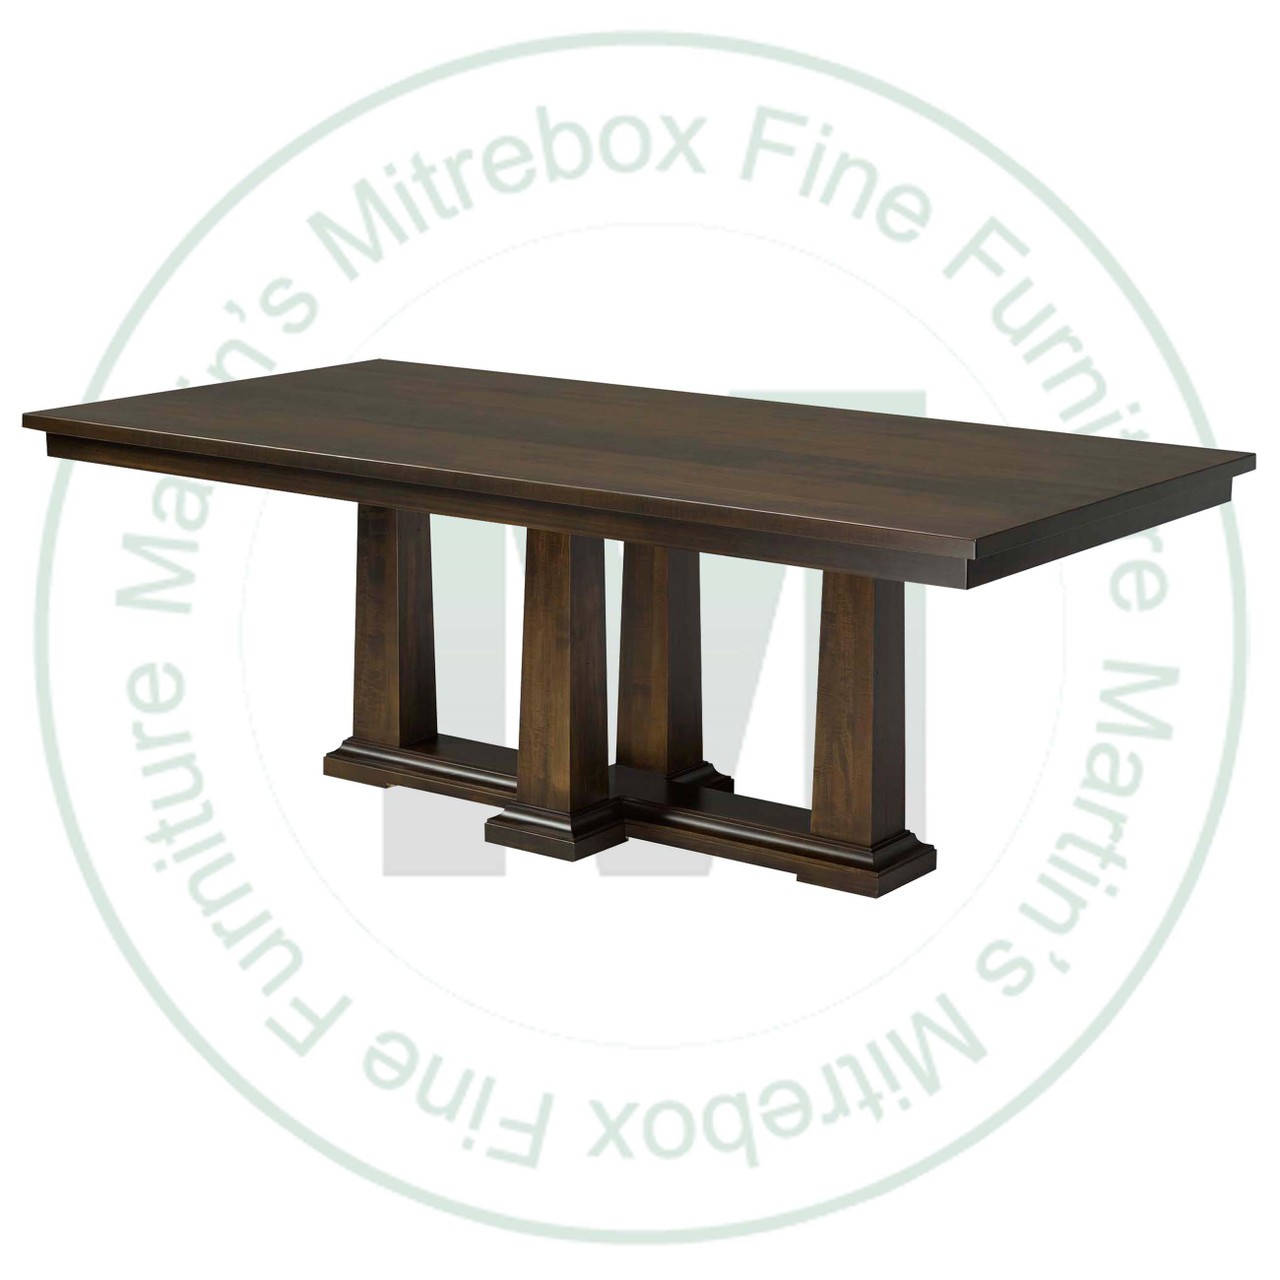 Oak Parthenon Double Pedestal Table 42''D x 72''W x 30''H Solid Top Table Has 1.75'' Thick Top